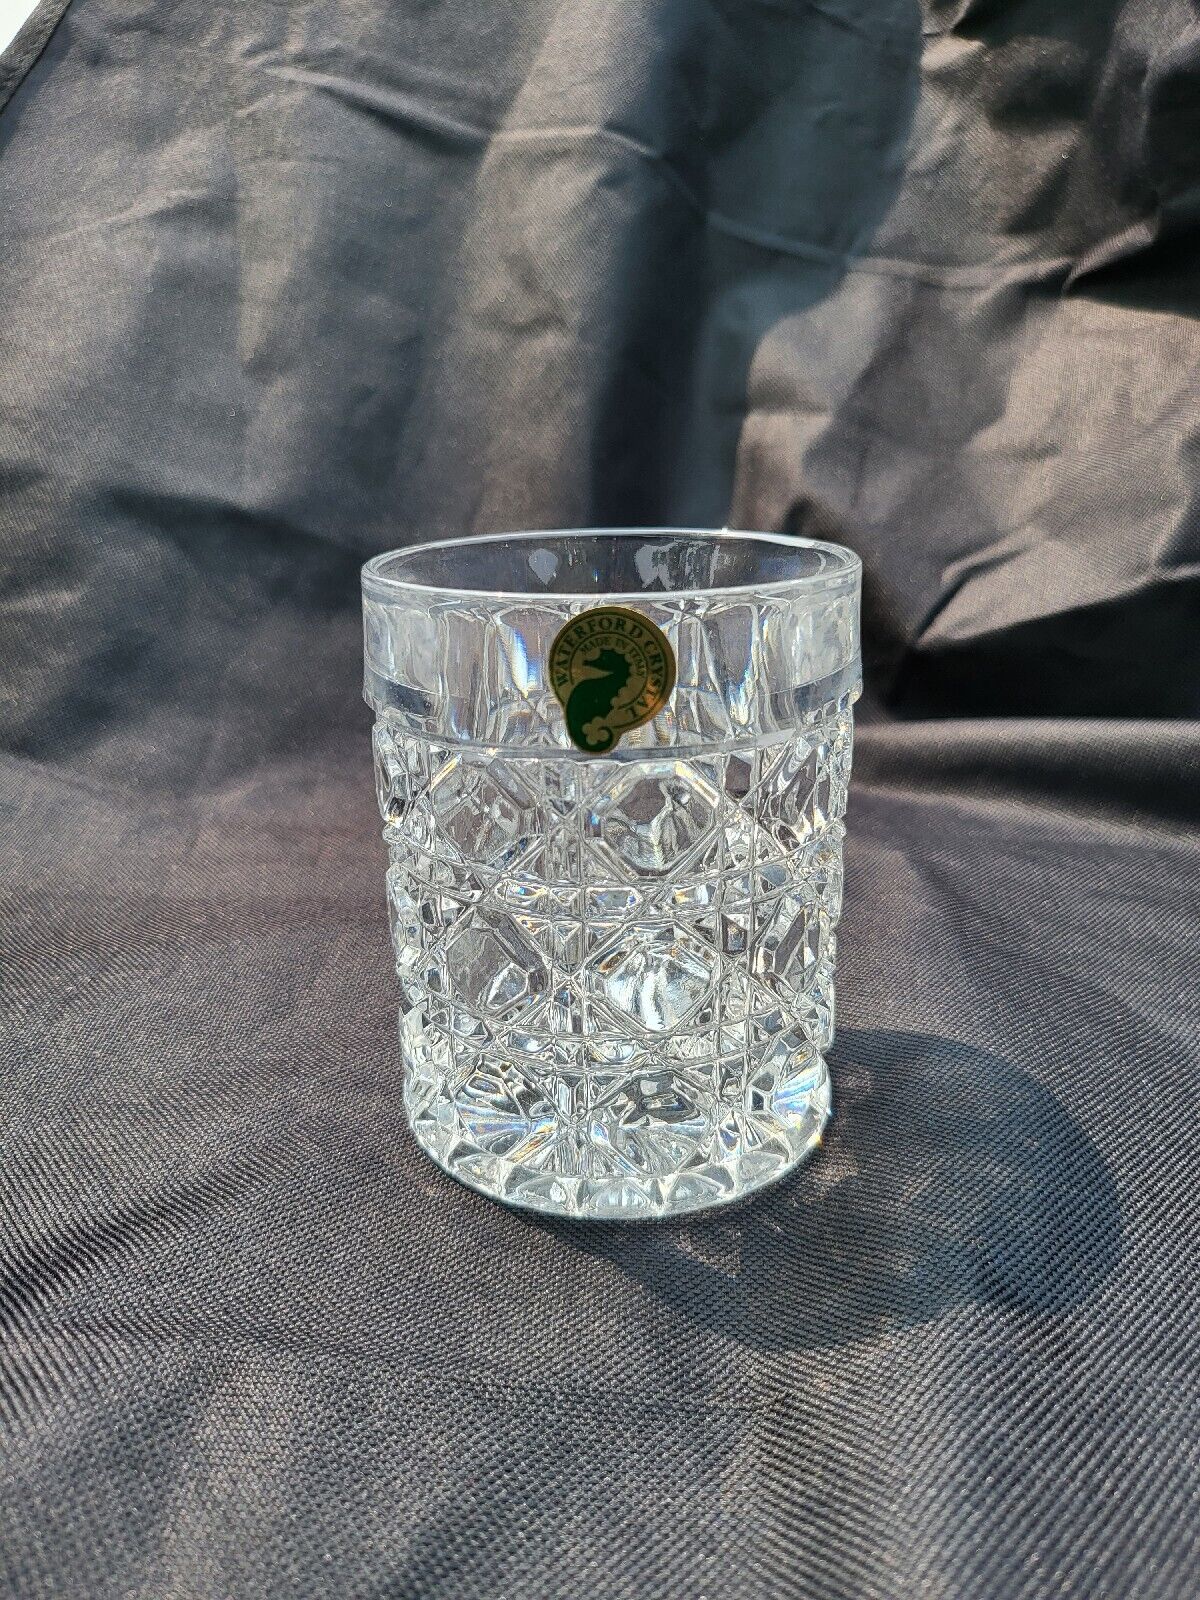 waterford crystal glasses